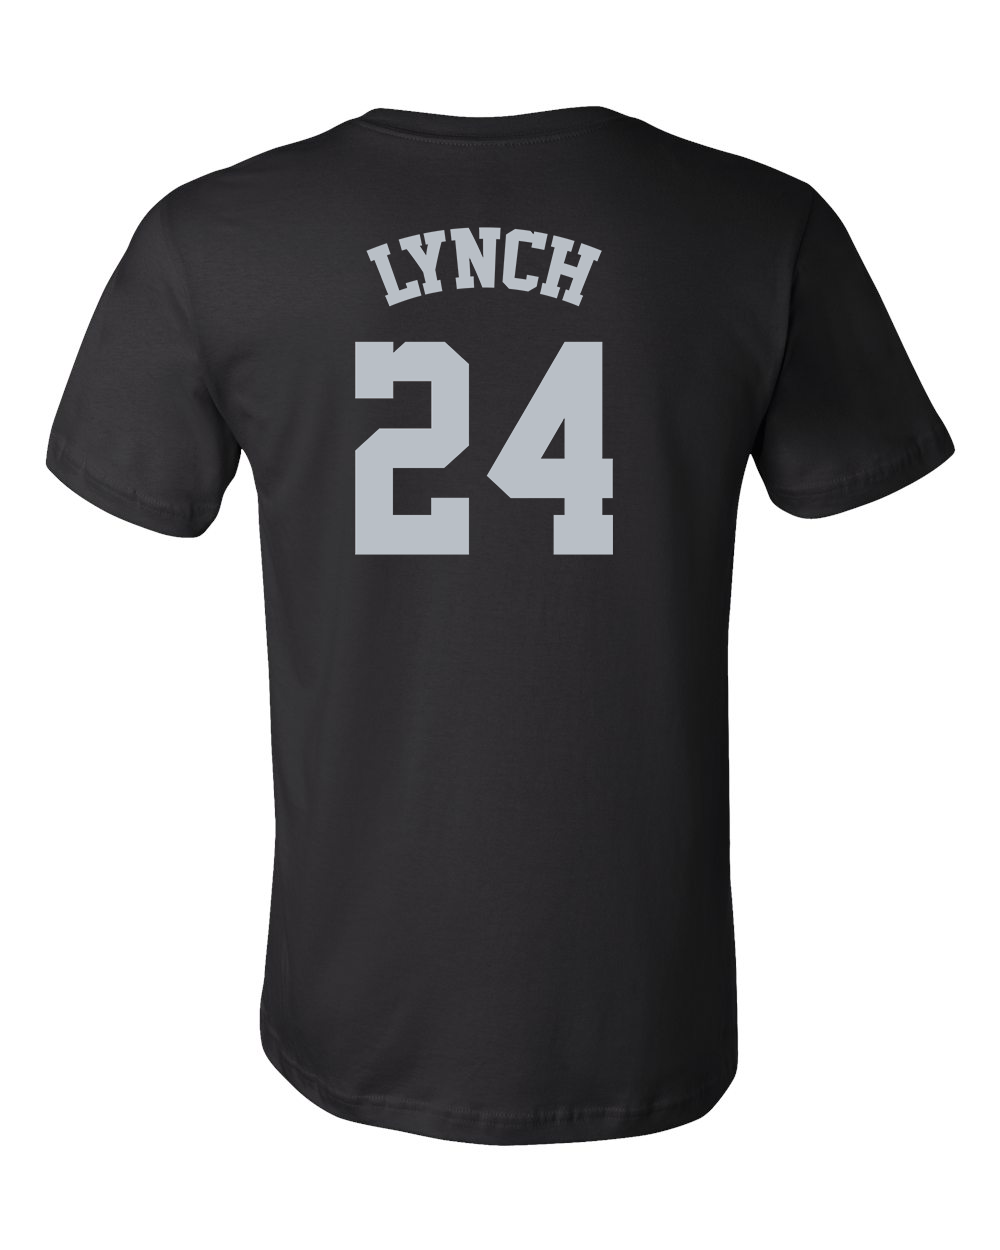 Marshawn Lynch Las Vegas Raiders #24 Jersey player shirt